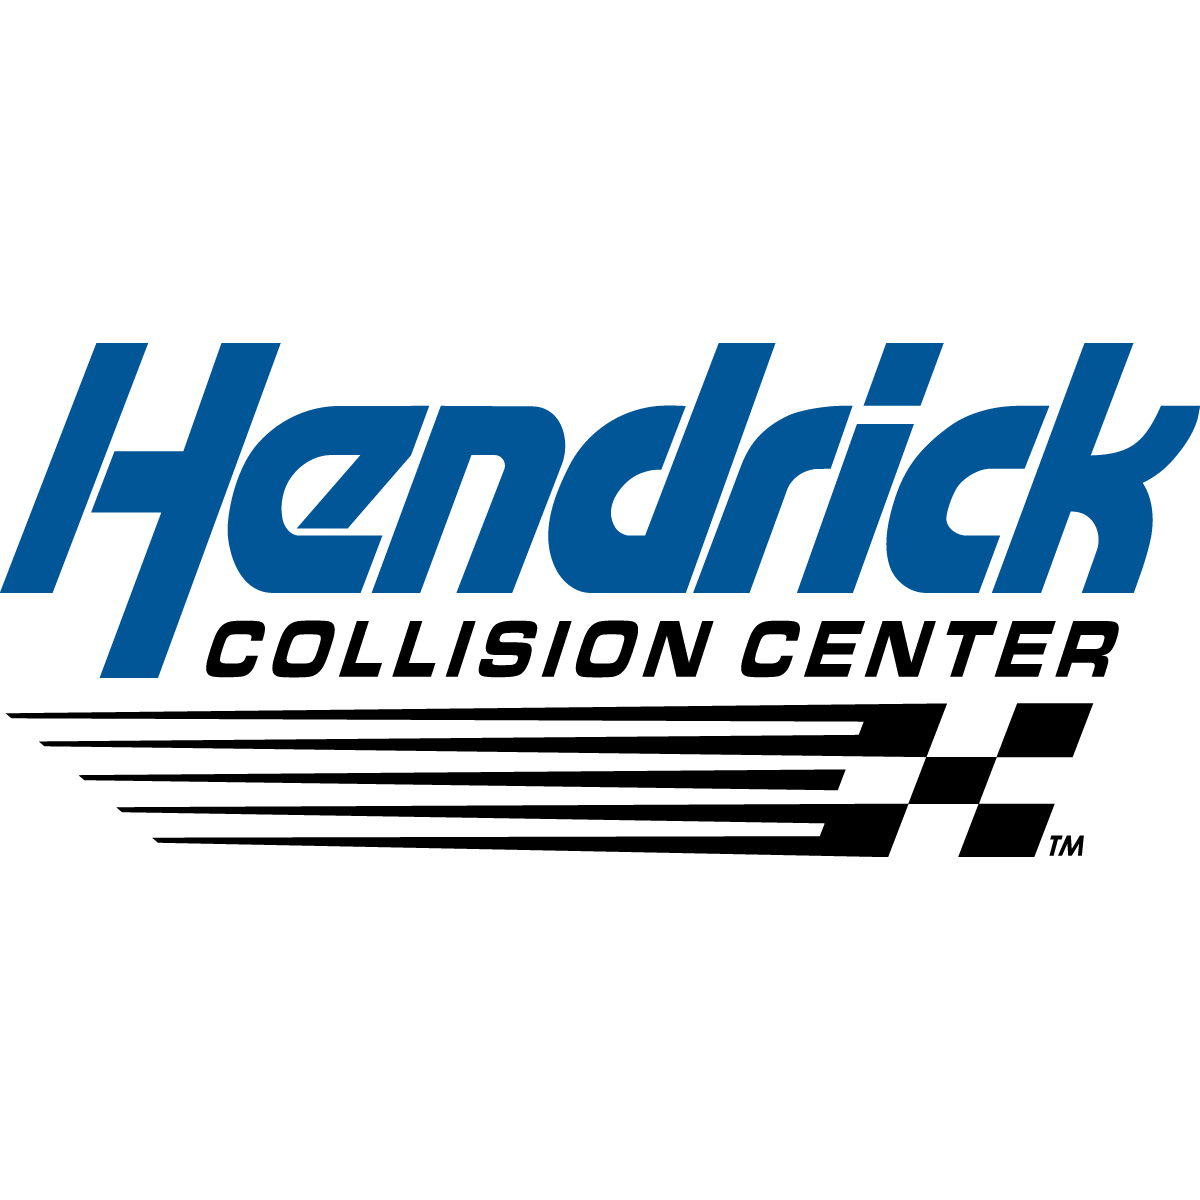 Rick Hendrick Collision Center Chesapeake Photo